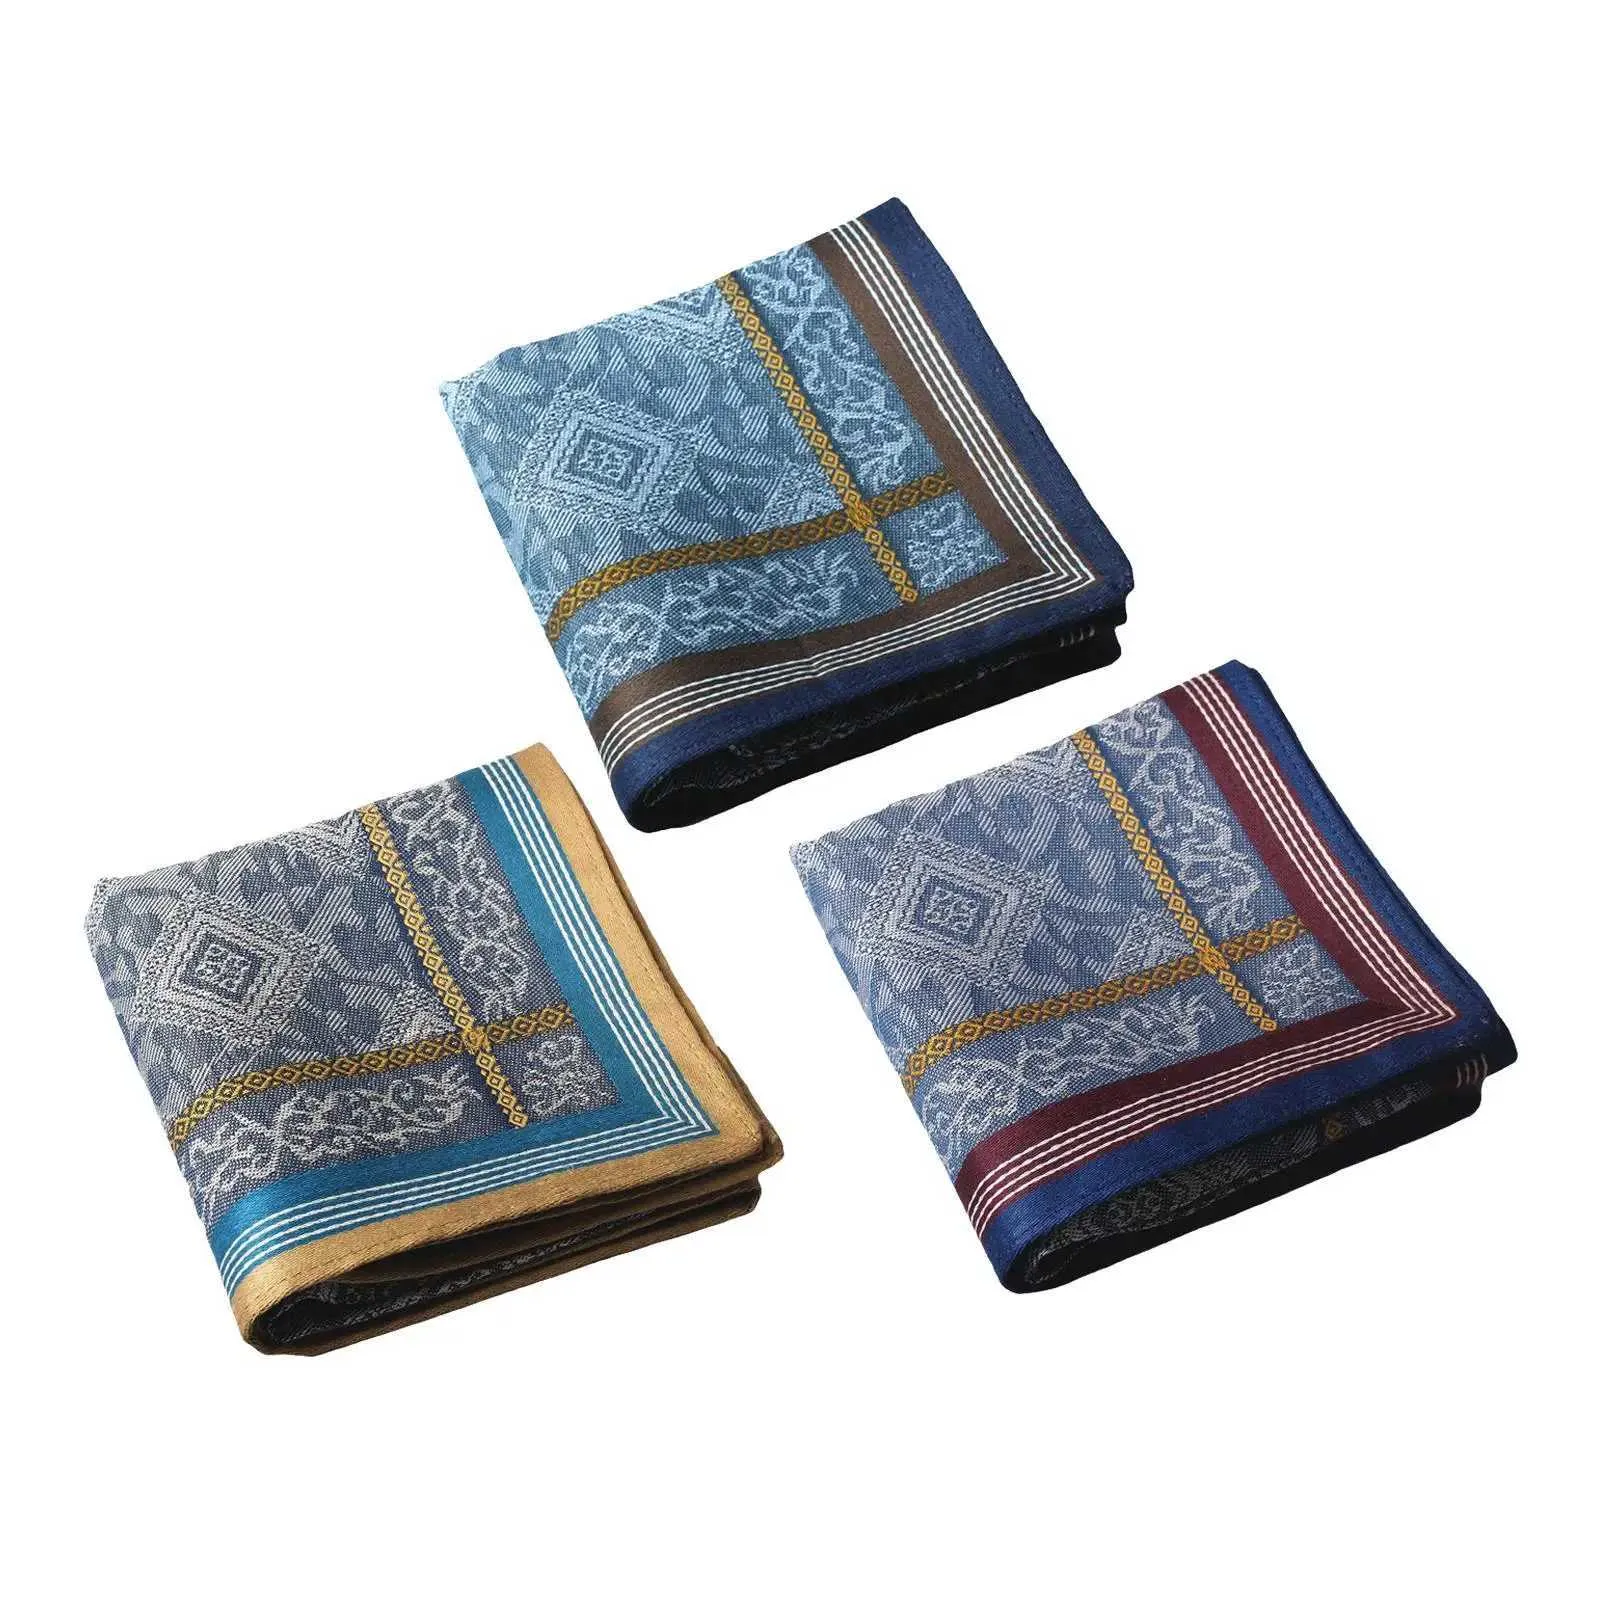 3x Assorted Color Cotton Mens Handkerchief Hankies 43Cmx43cm Gift Kerchief Pocket Square for Gentlemen Gents Party Celebration